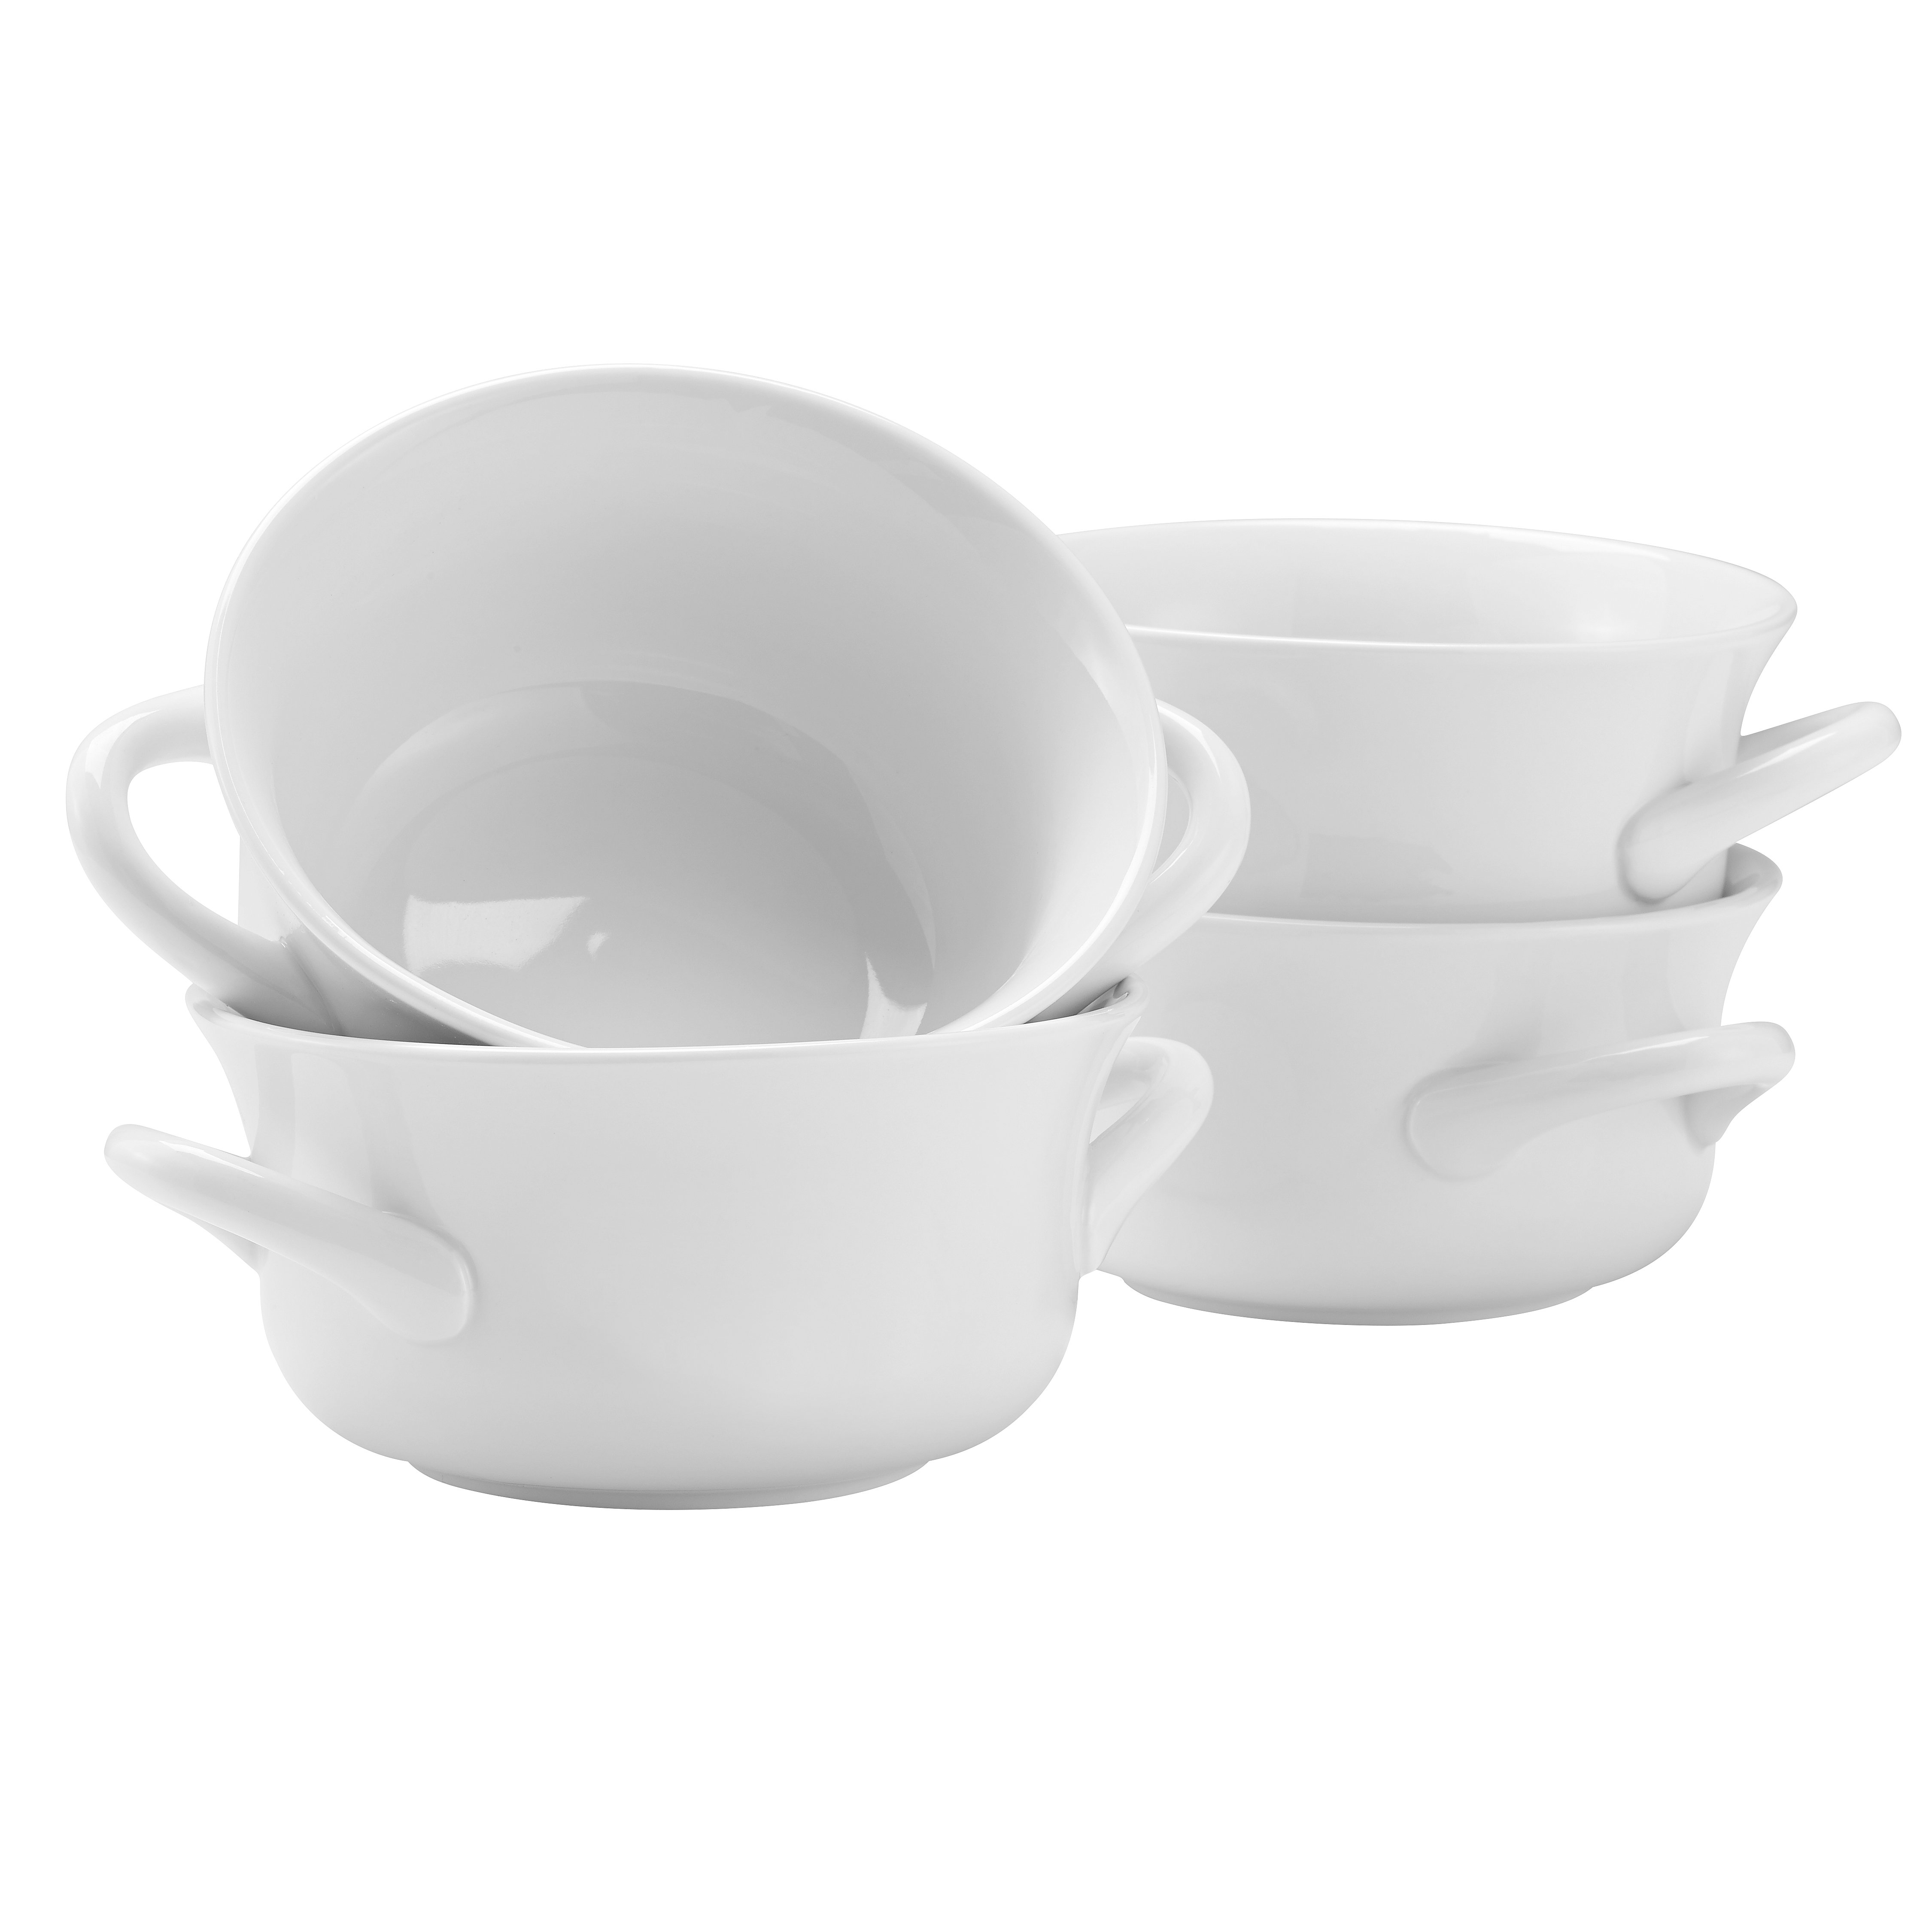 soup bowls with handles australia